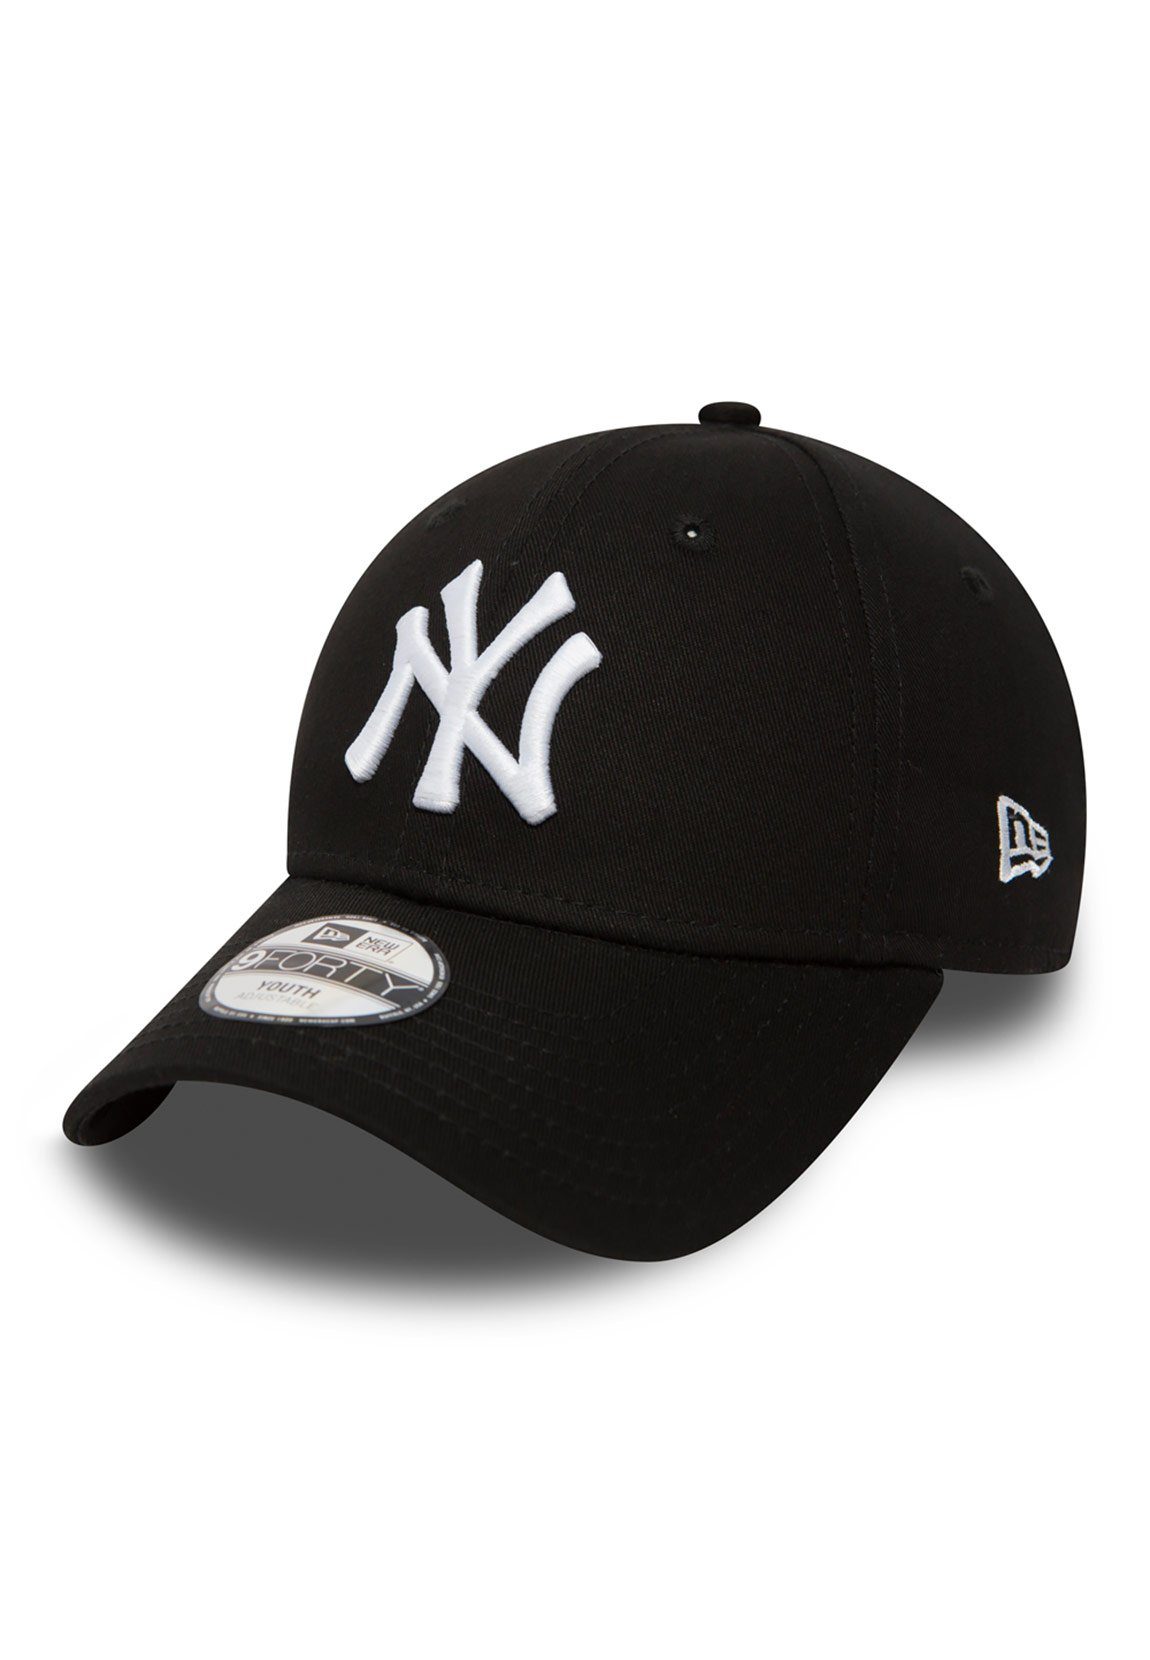 beste Qualität New Era Schwarz/Weiß Kids - Cap Black-White Adjustables YANKEES Cap NY New - Era Baseball